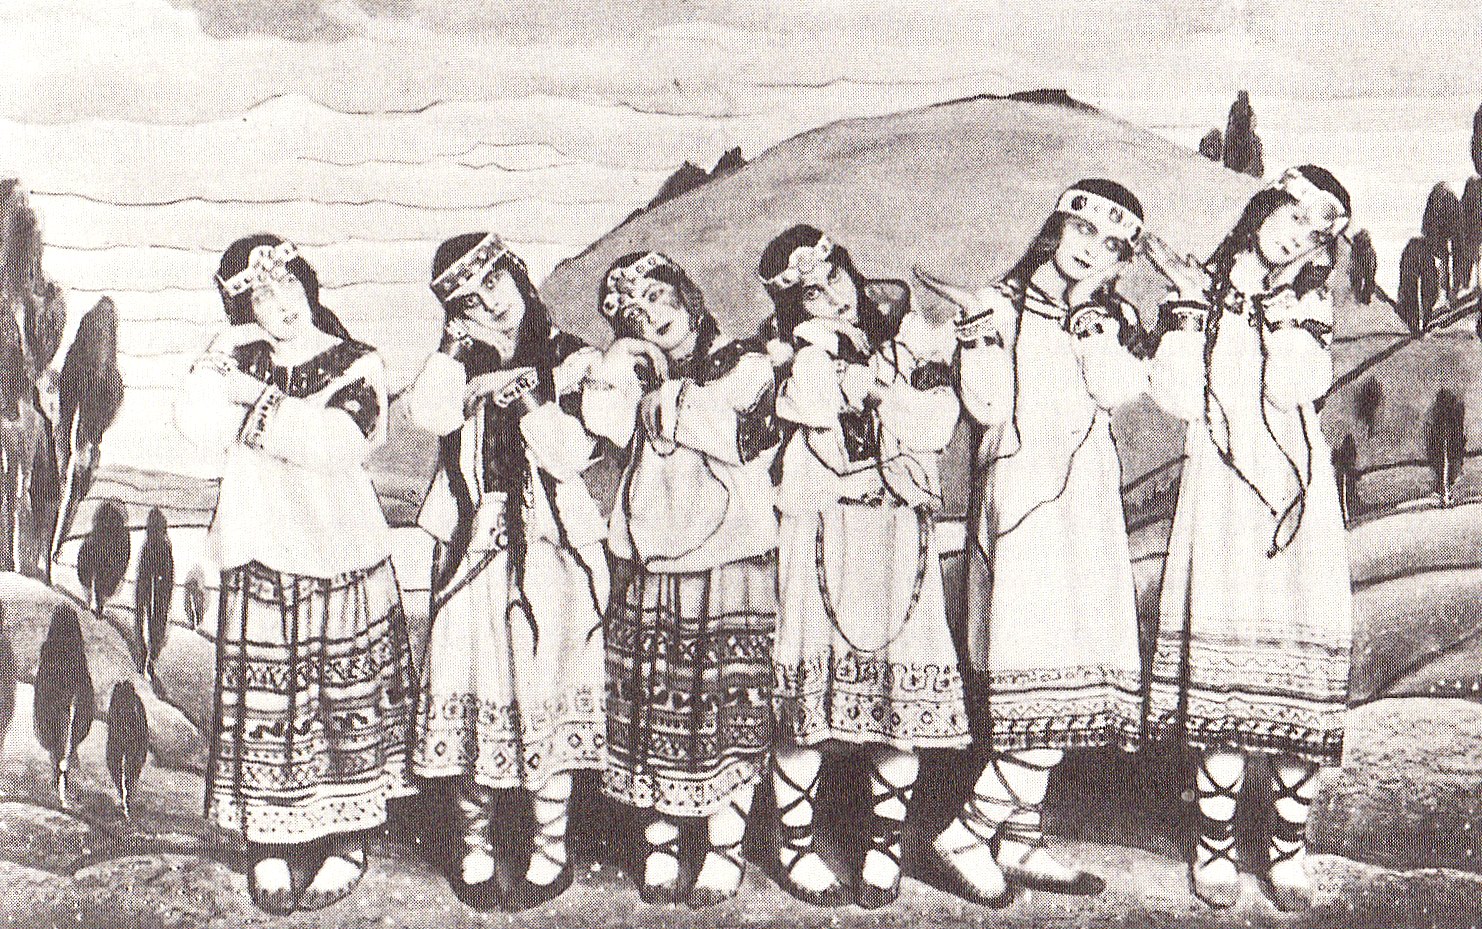 A group of dancers from the original 1913 production of Stravinsky's ballet Le Sacre du printemps.